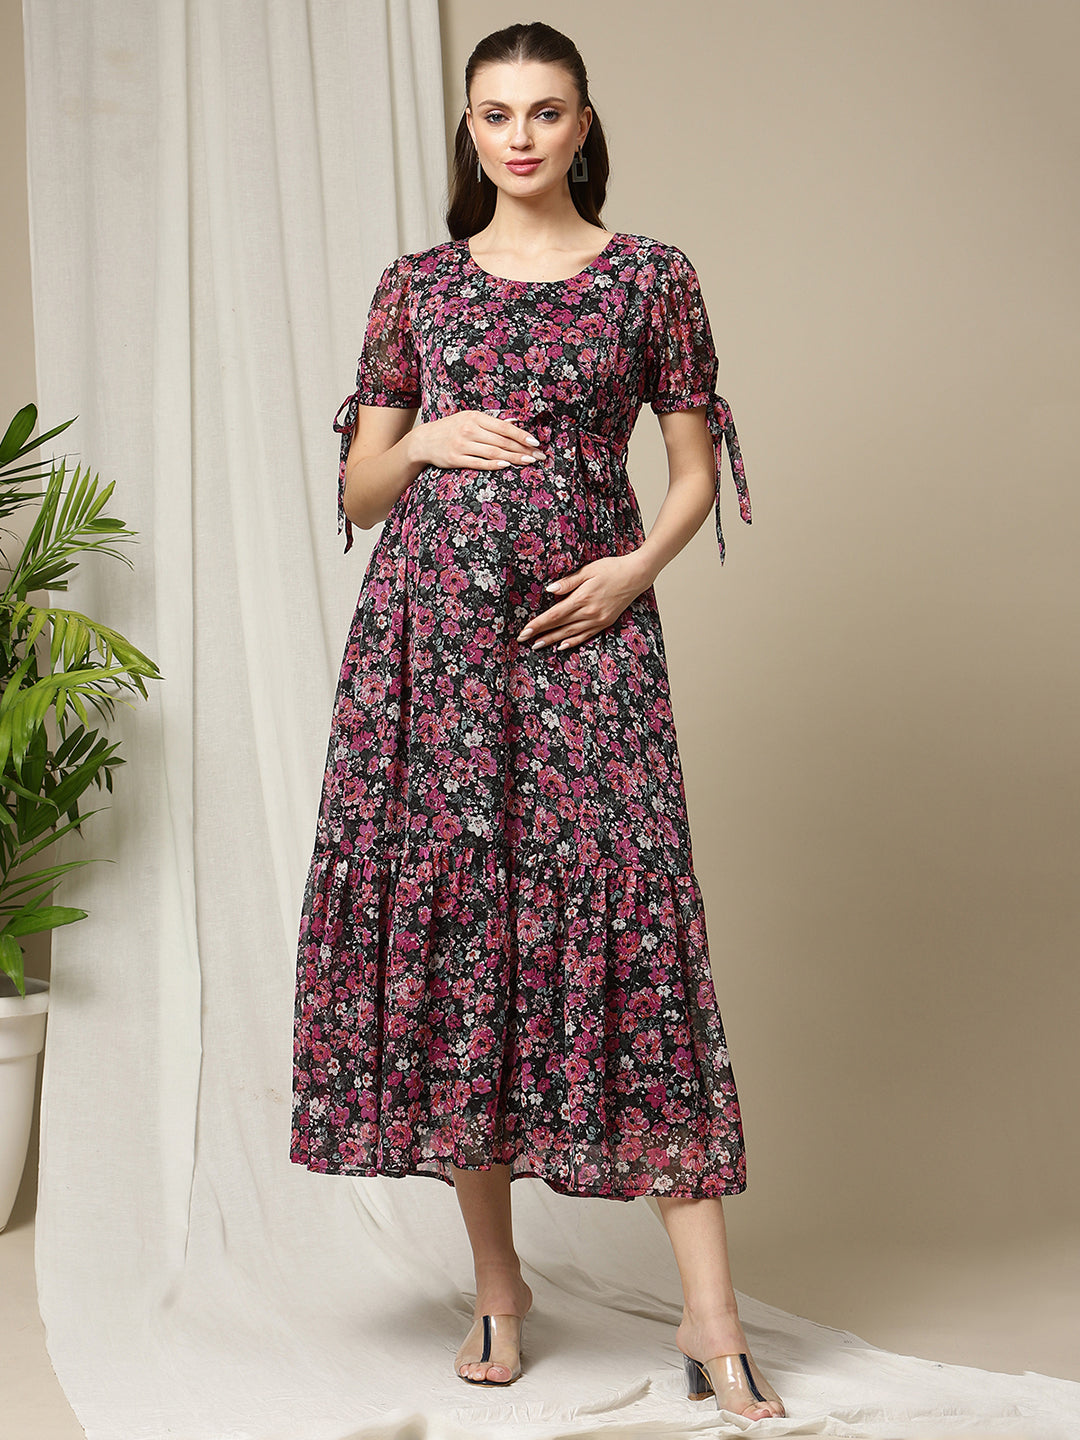 Maternity Dresses Babyshower Skirts Pregnant Women Gowns Evening Bathrobe |  eBay